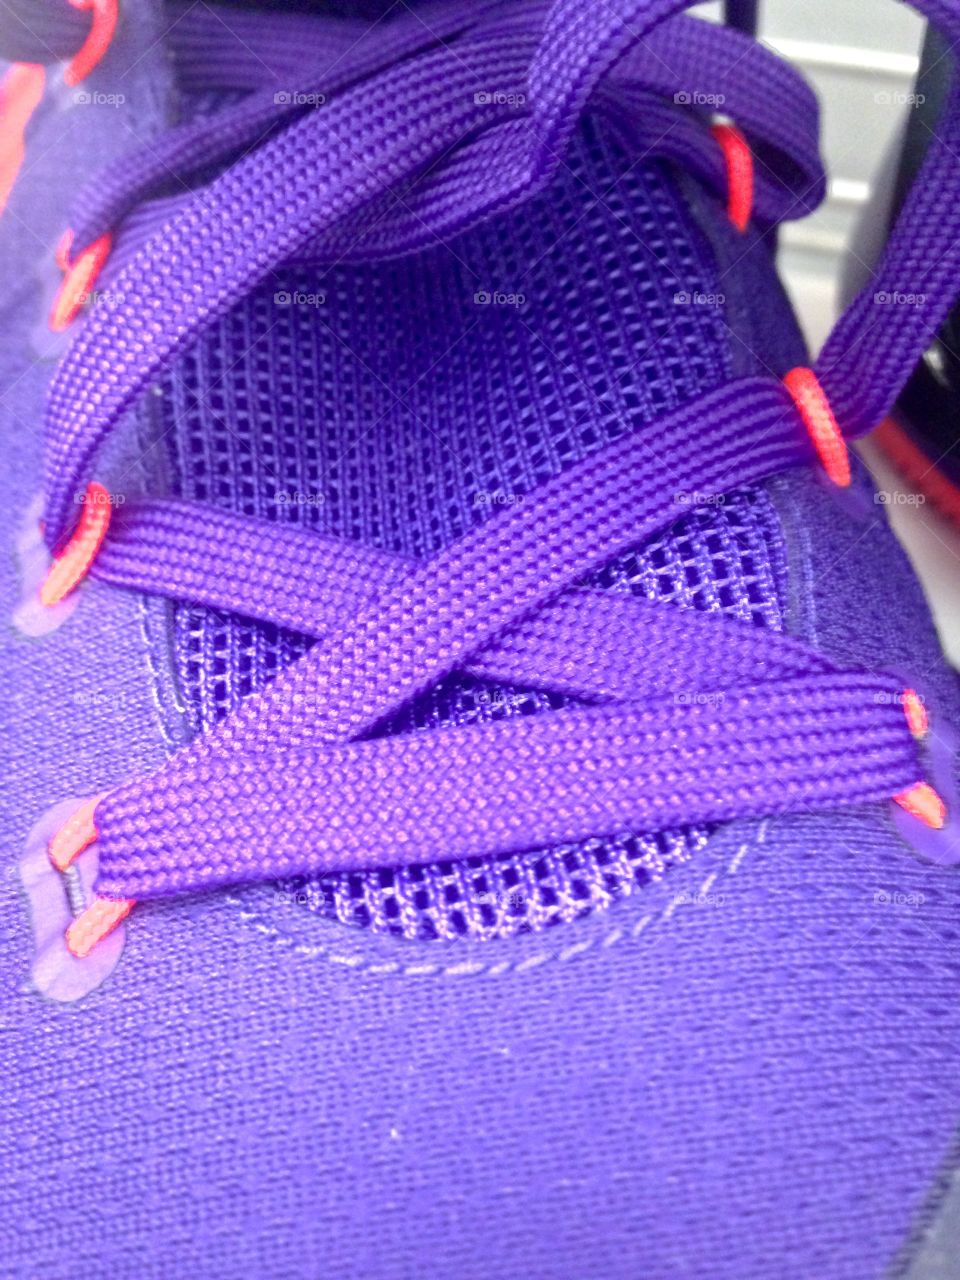 Purple Basketball Shoes

Published by:
HappyBrownMonkey 